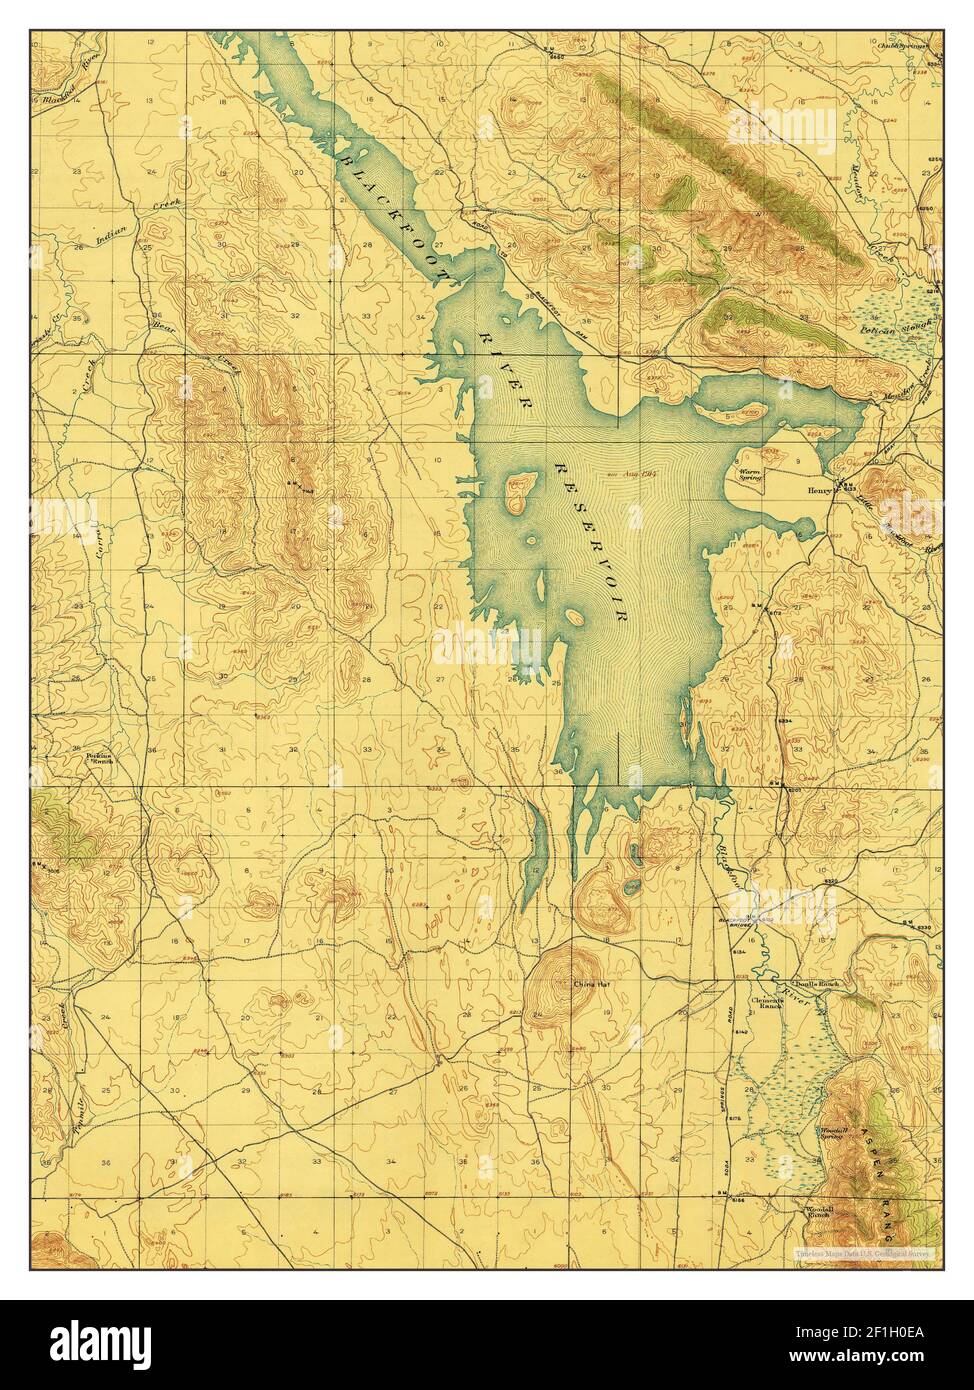 Henry, Idaho, map 1916, 1:62500, United States of America by Timeless Maps, data U.S. Geological Survey Stock Photo